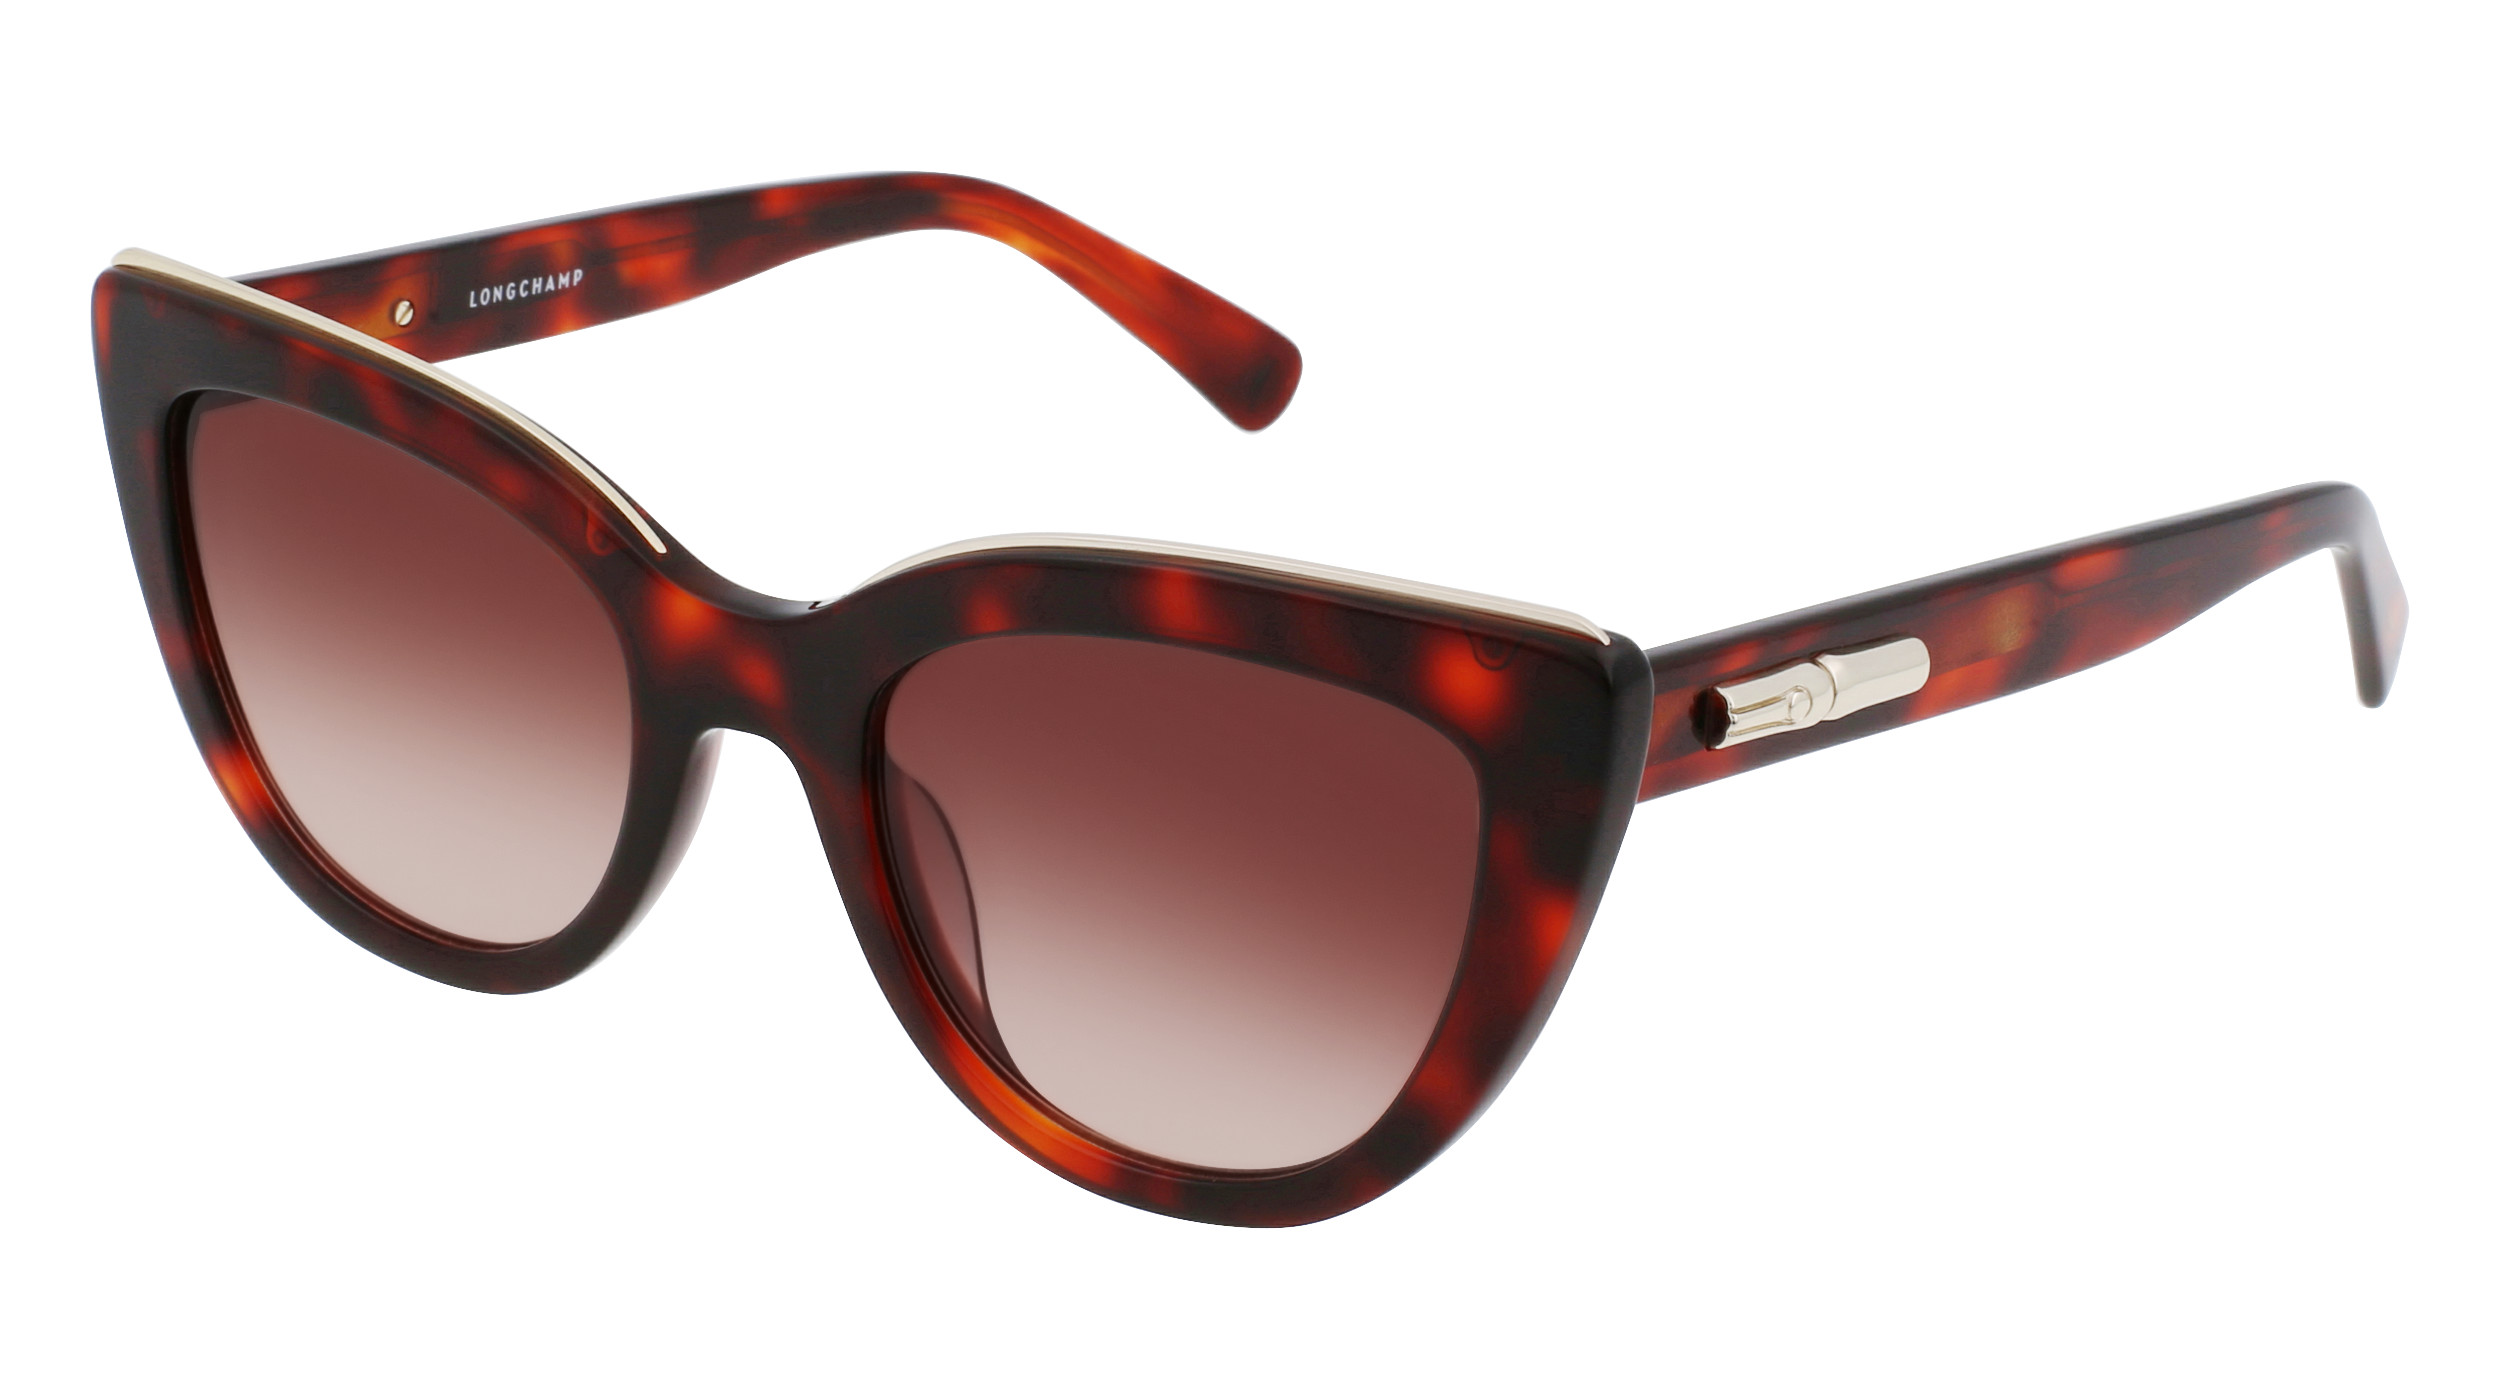 Longchamp Red Tart Sunglasses By Longchamp By G&M Eyecare